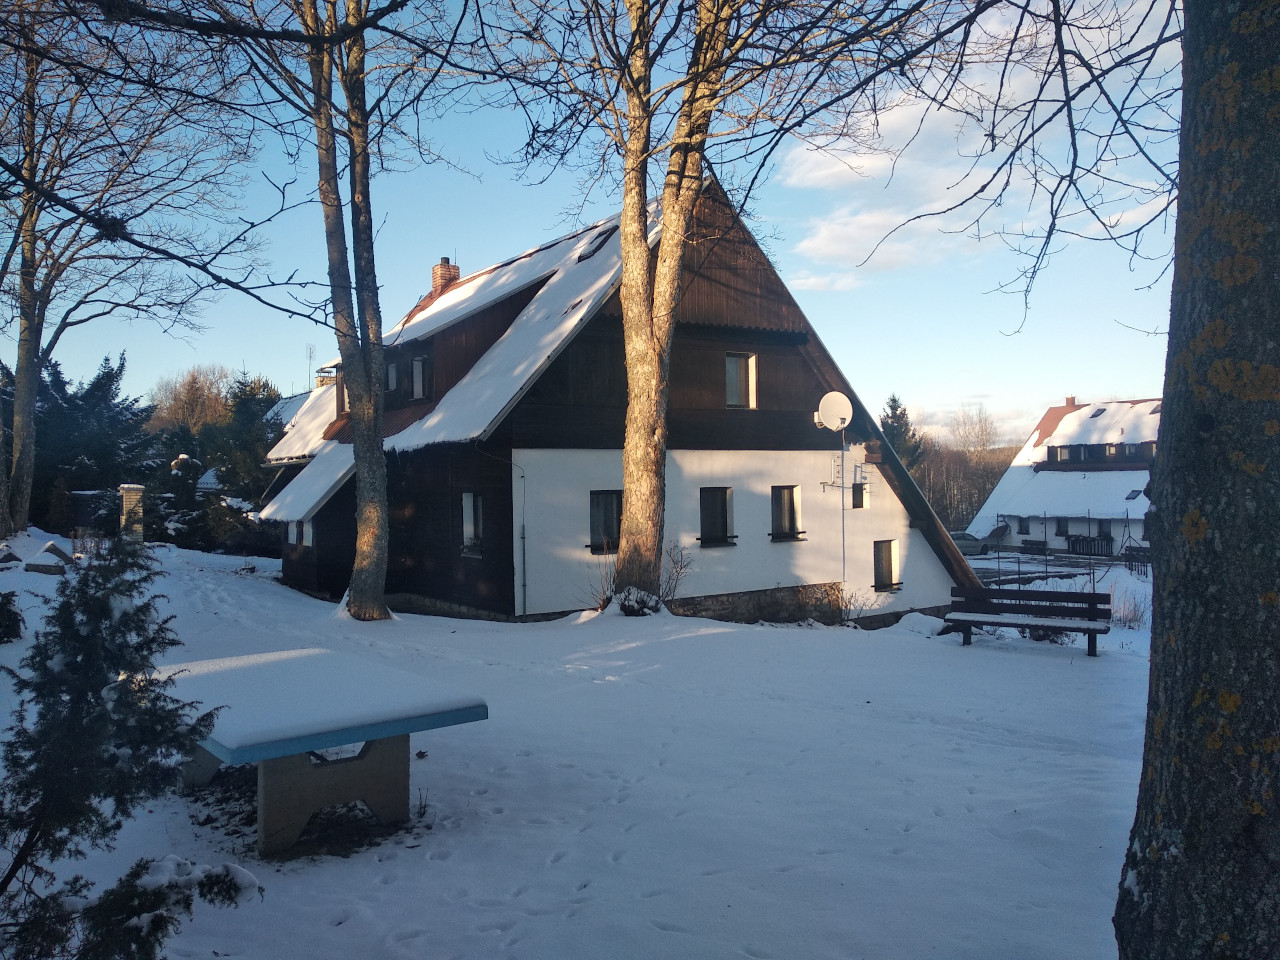 Horská chata v zimě - fotografie